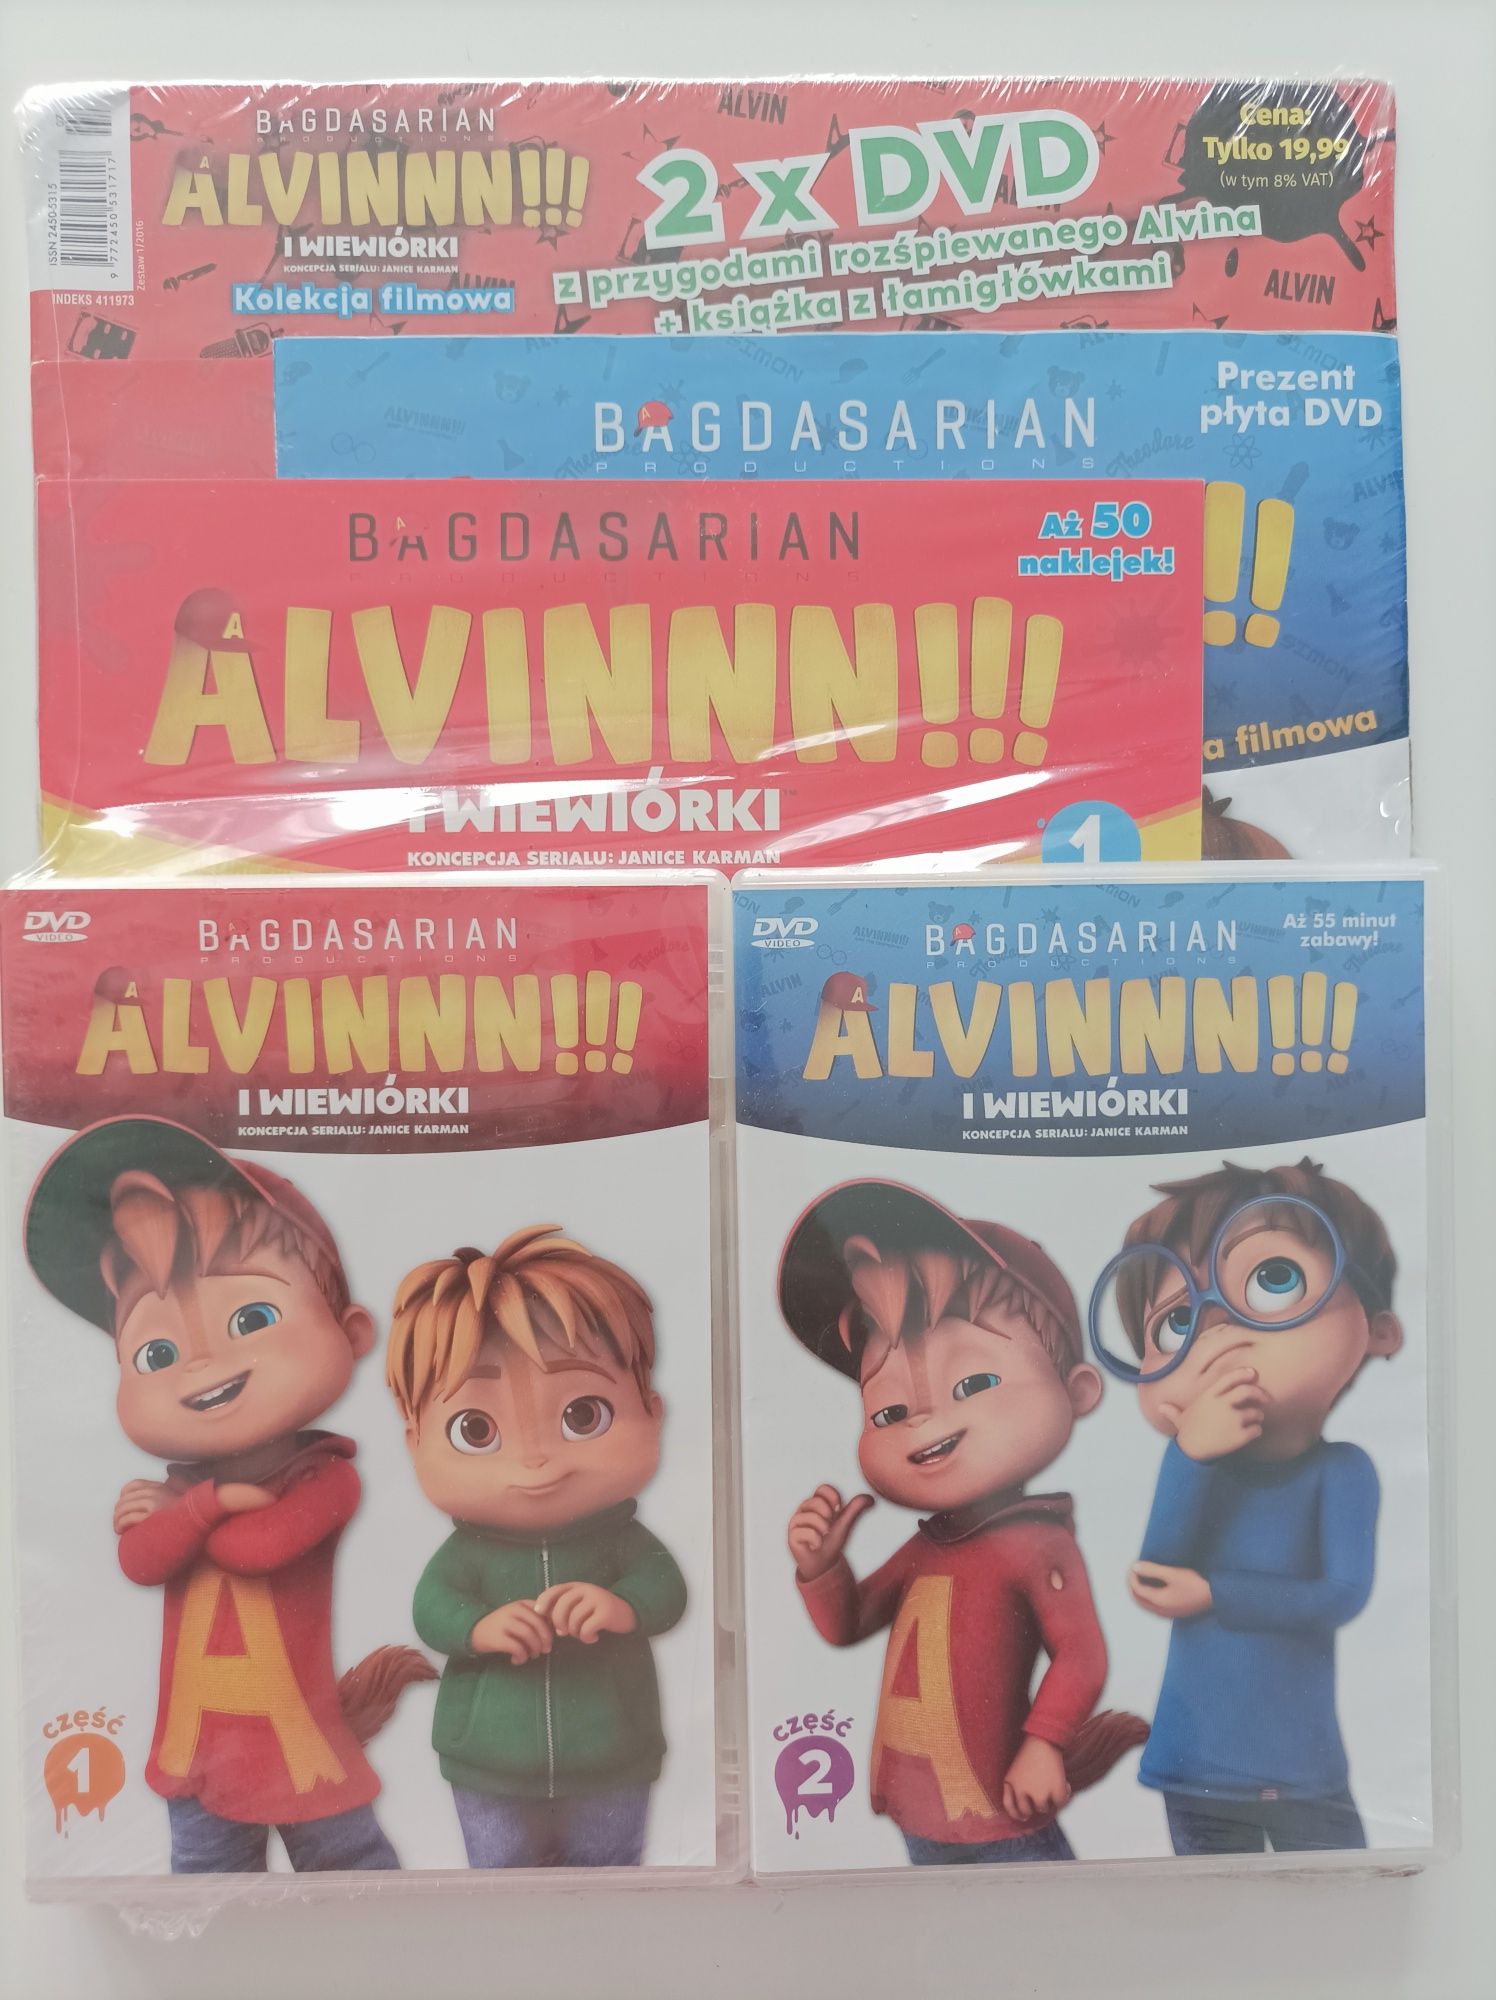 Alvin plyty dvd z dodatkami